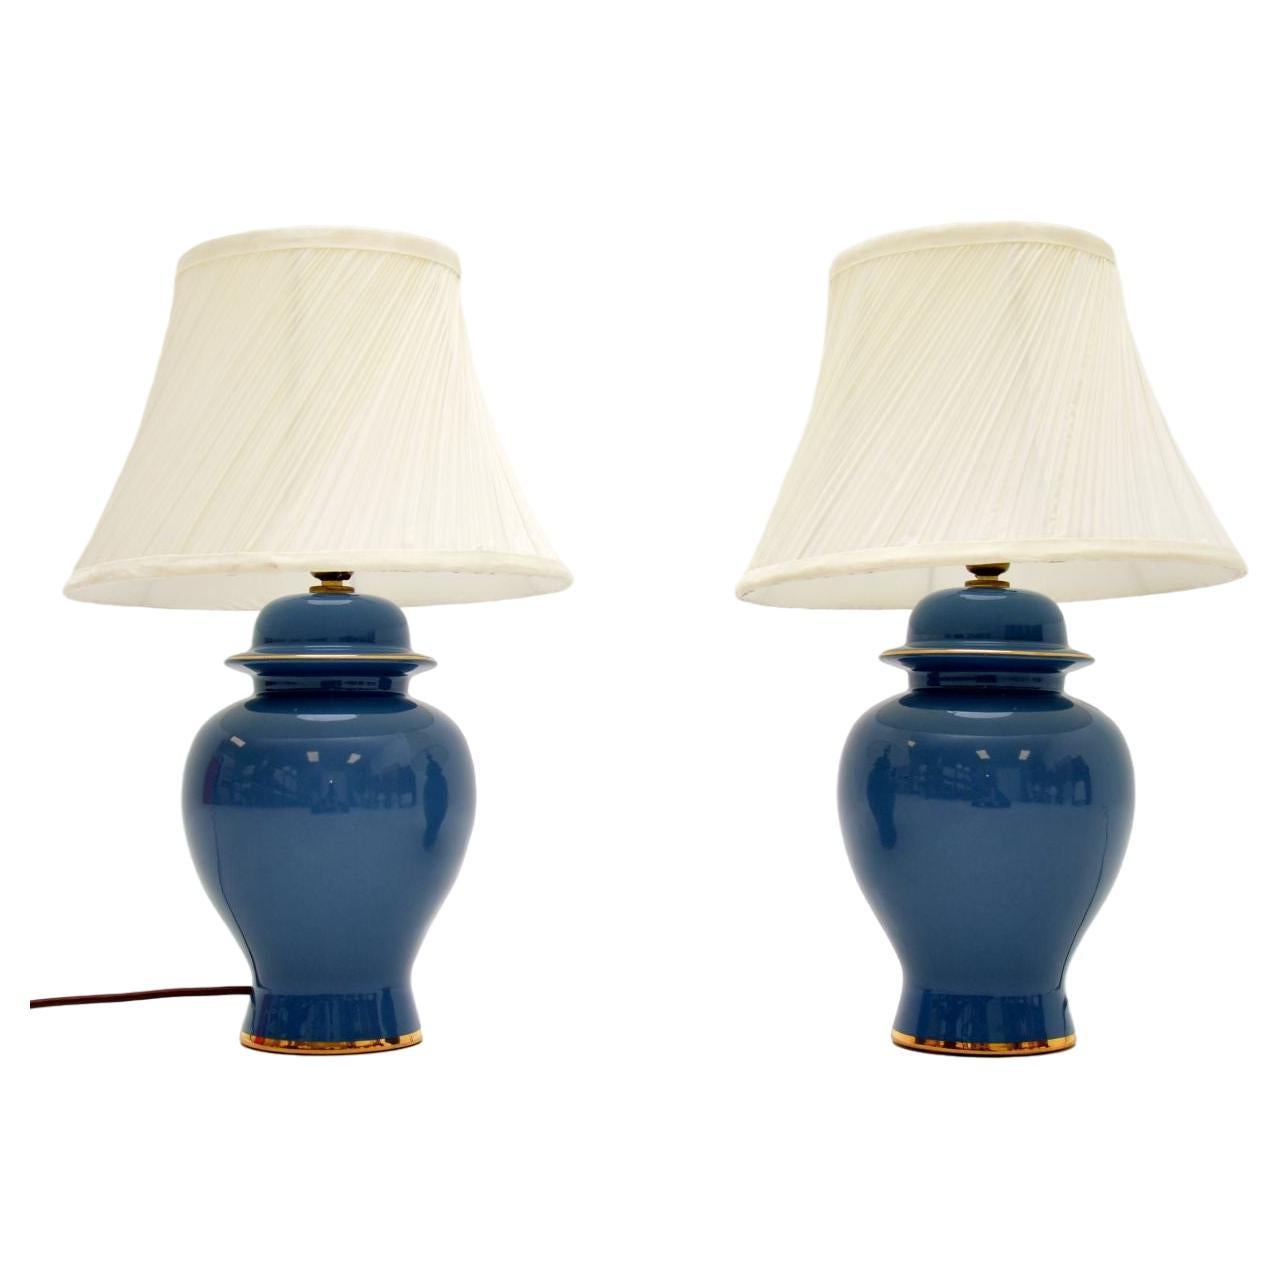 Pair of Vintage Ceramic Table Lamps